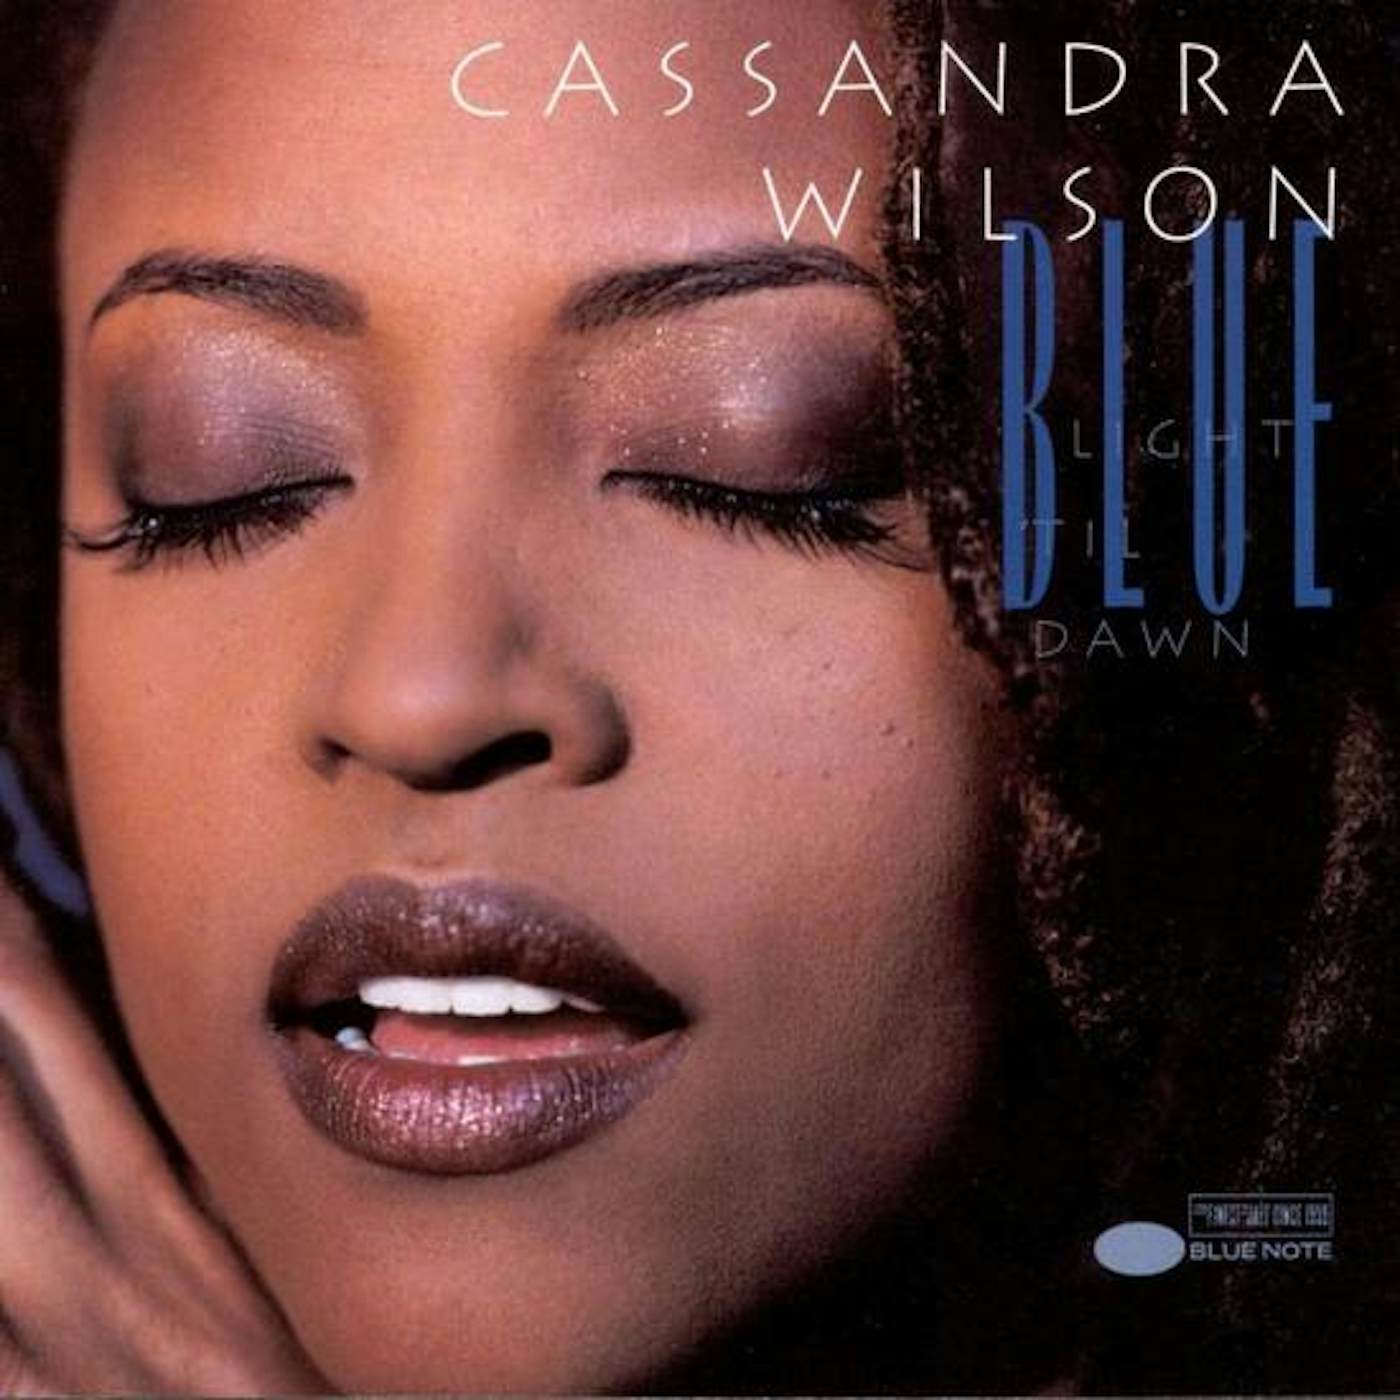 Cassandra Wilson BLUE LIGHT TIL DAWN Vinyl Record